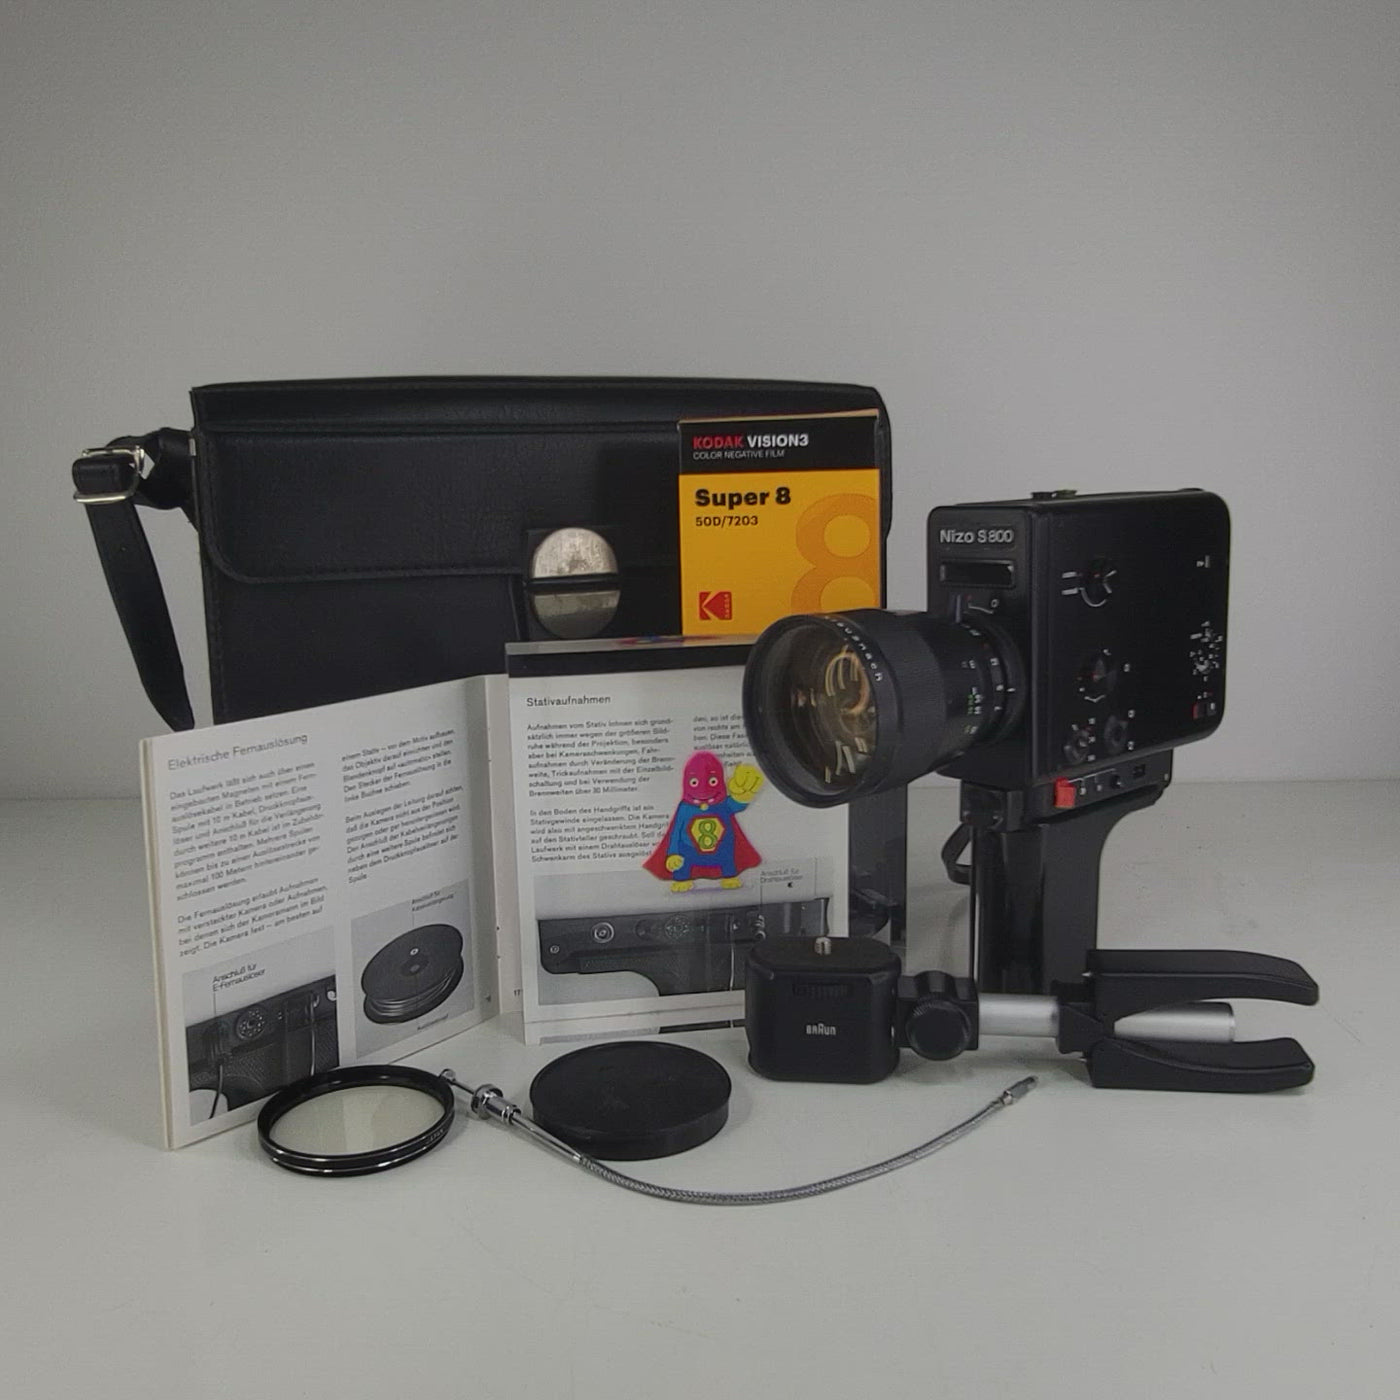 Nizo S800 Super 8 Camera Filmmaker's Bundle with plenty of Accessories!